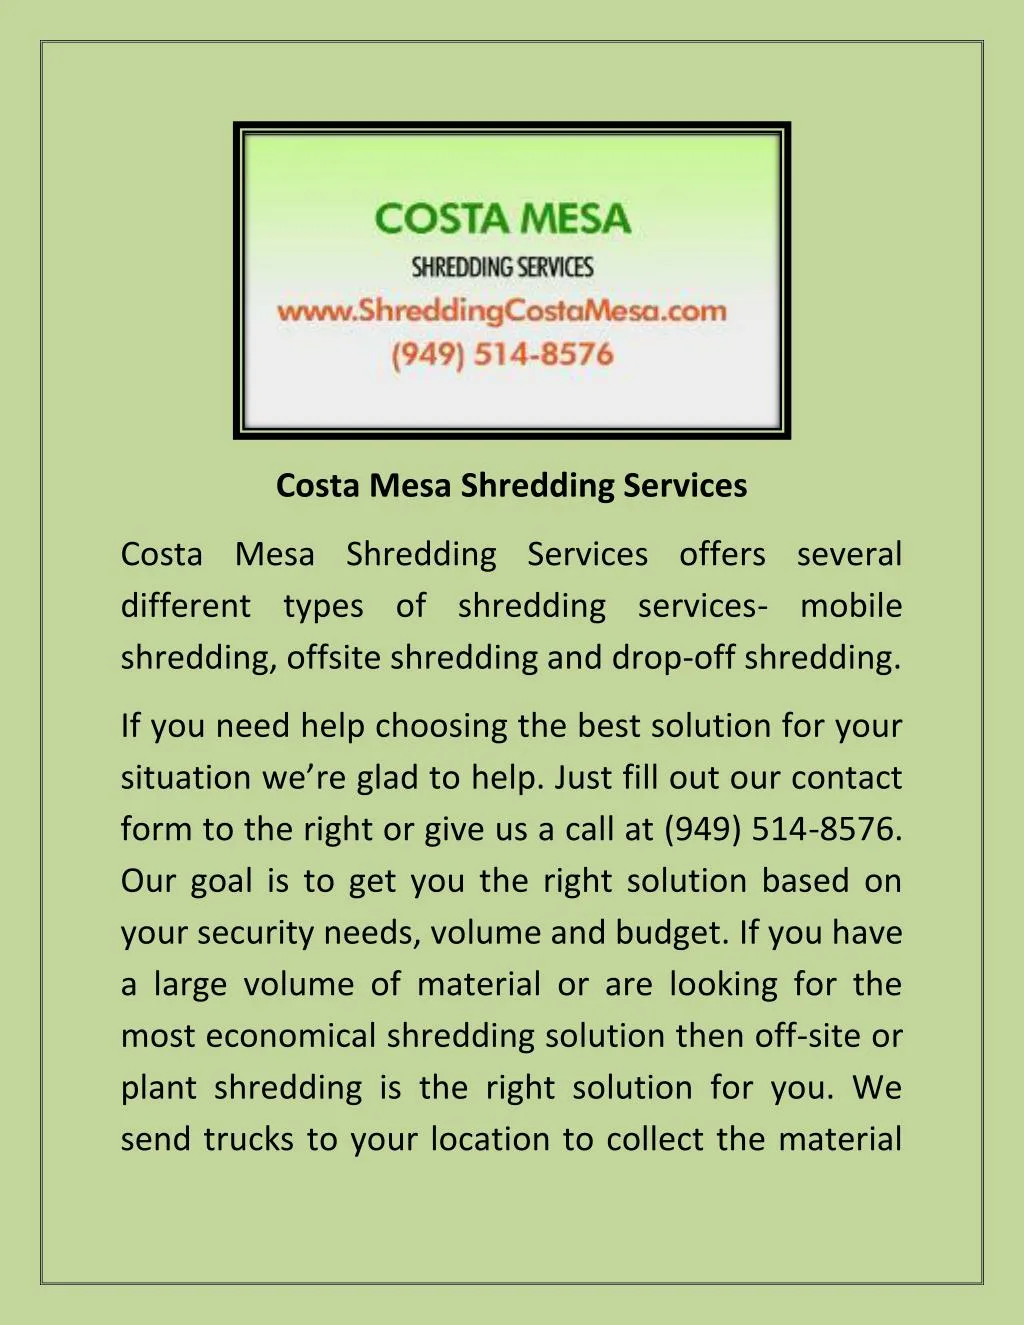 costa mesa shredding services